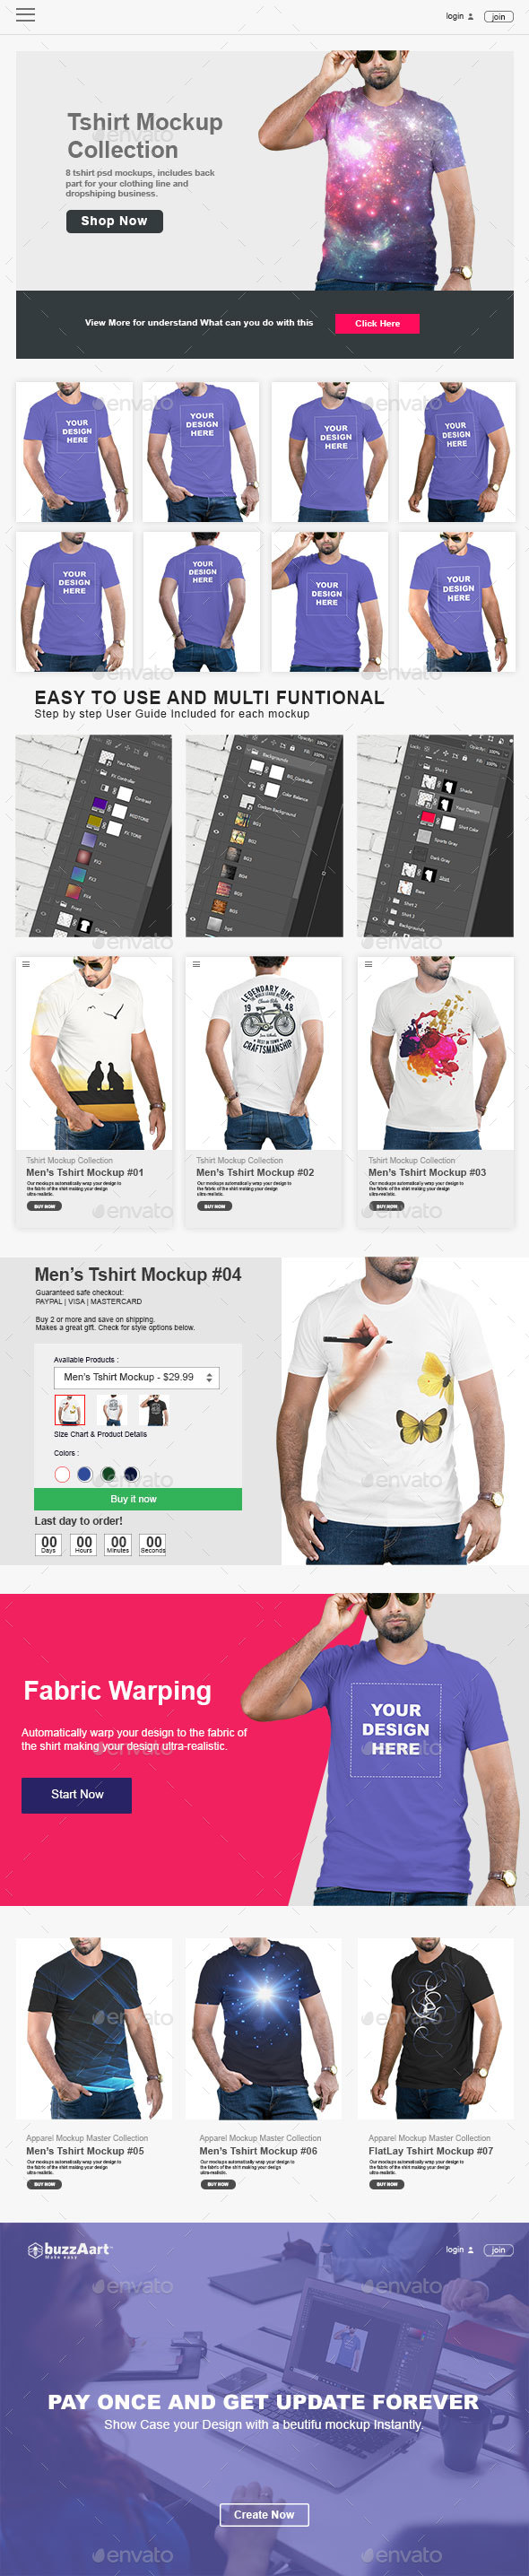 Download Tshirt Mockups Graphics Designs Templates From Graphicriver PSD Mockup Templates